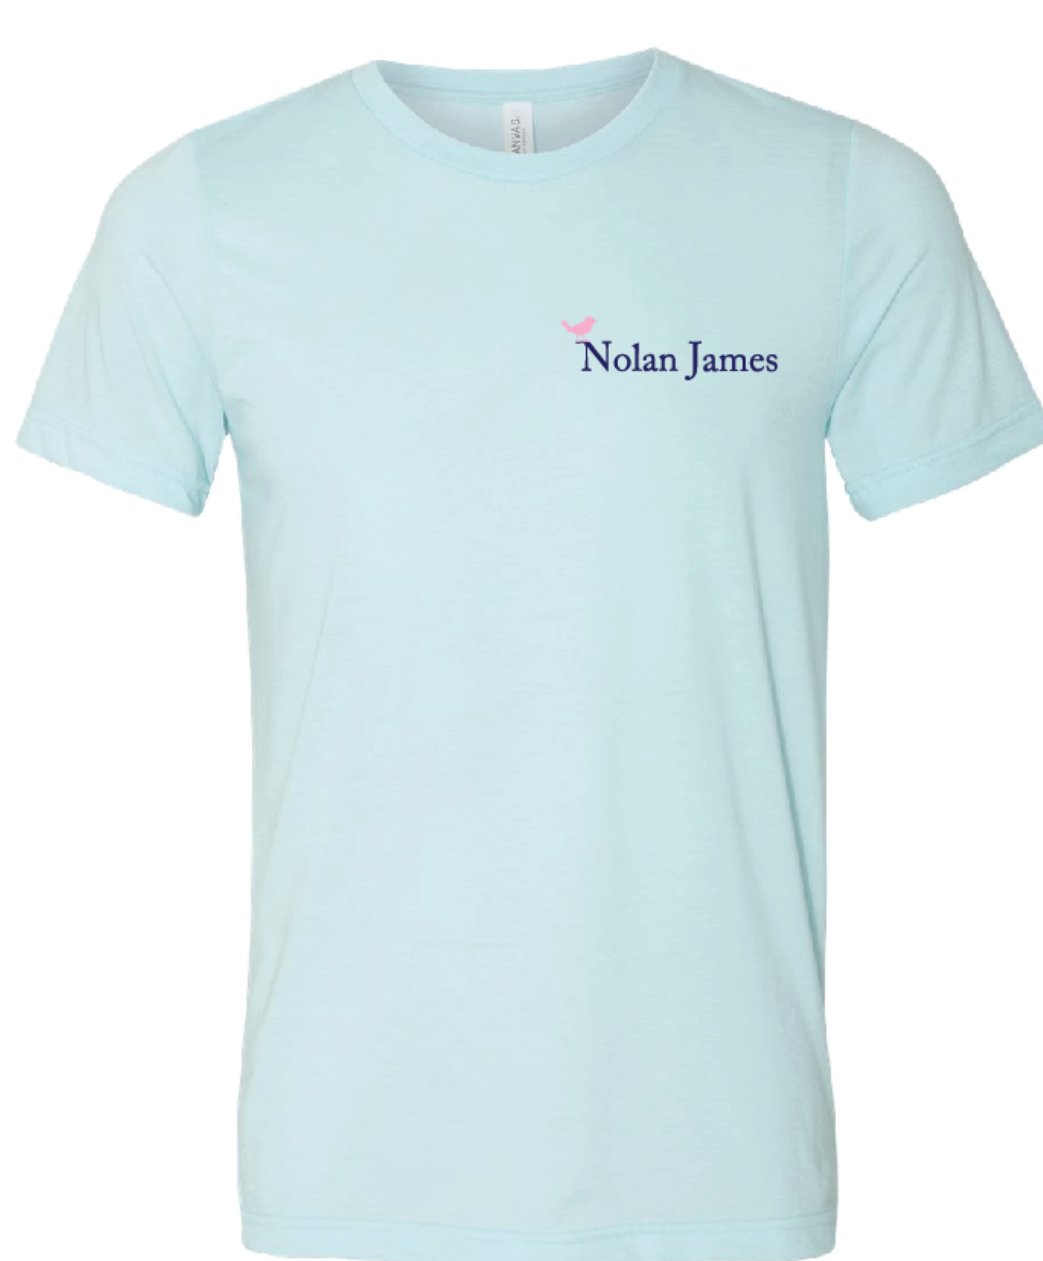 Nolan James T-Shirt - Ice Blue